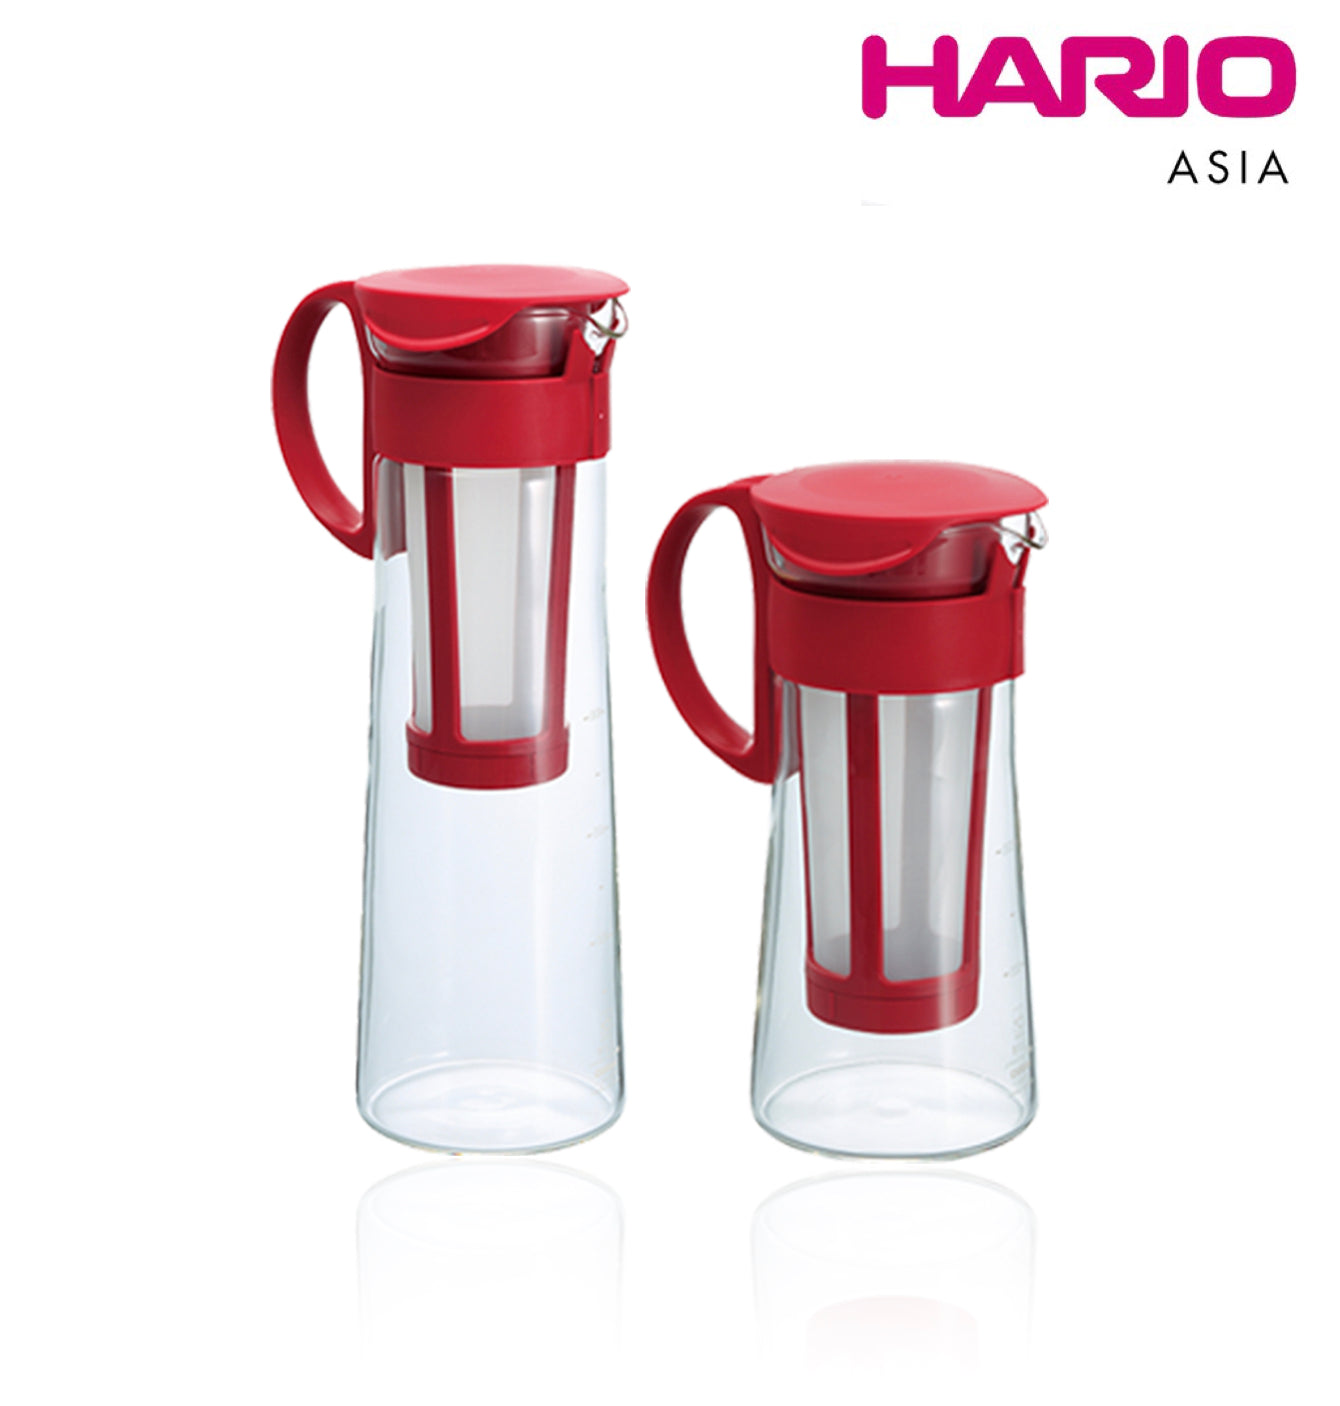 Hario 1000 ml Mizudashi Cold Brew Coffee Pot, Red